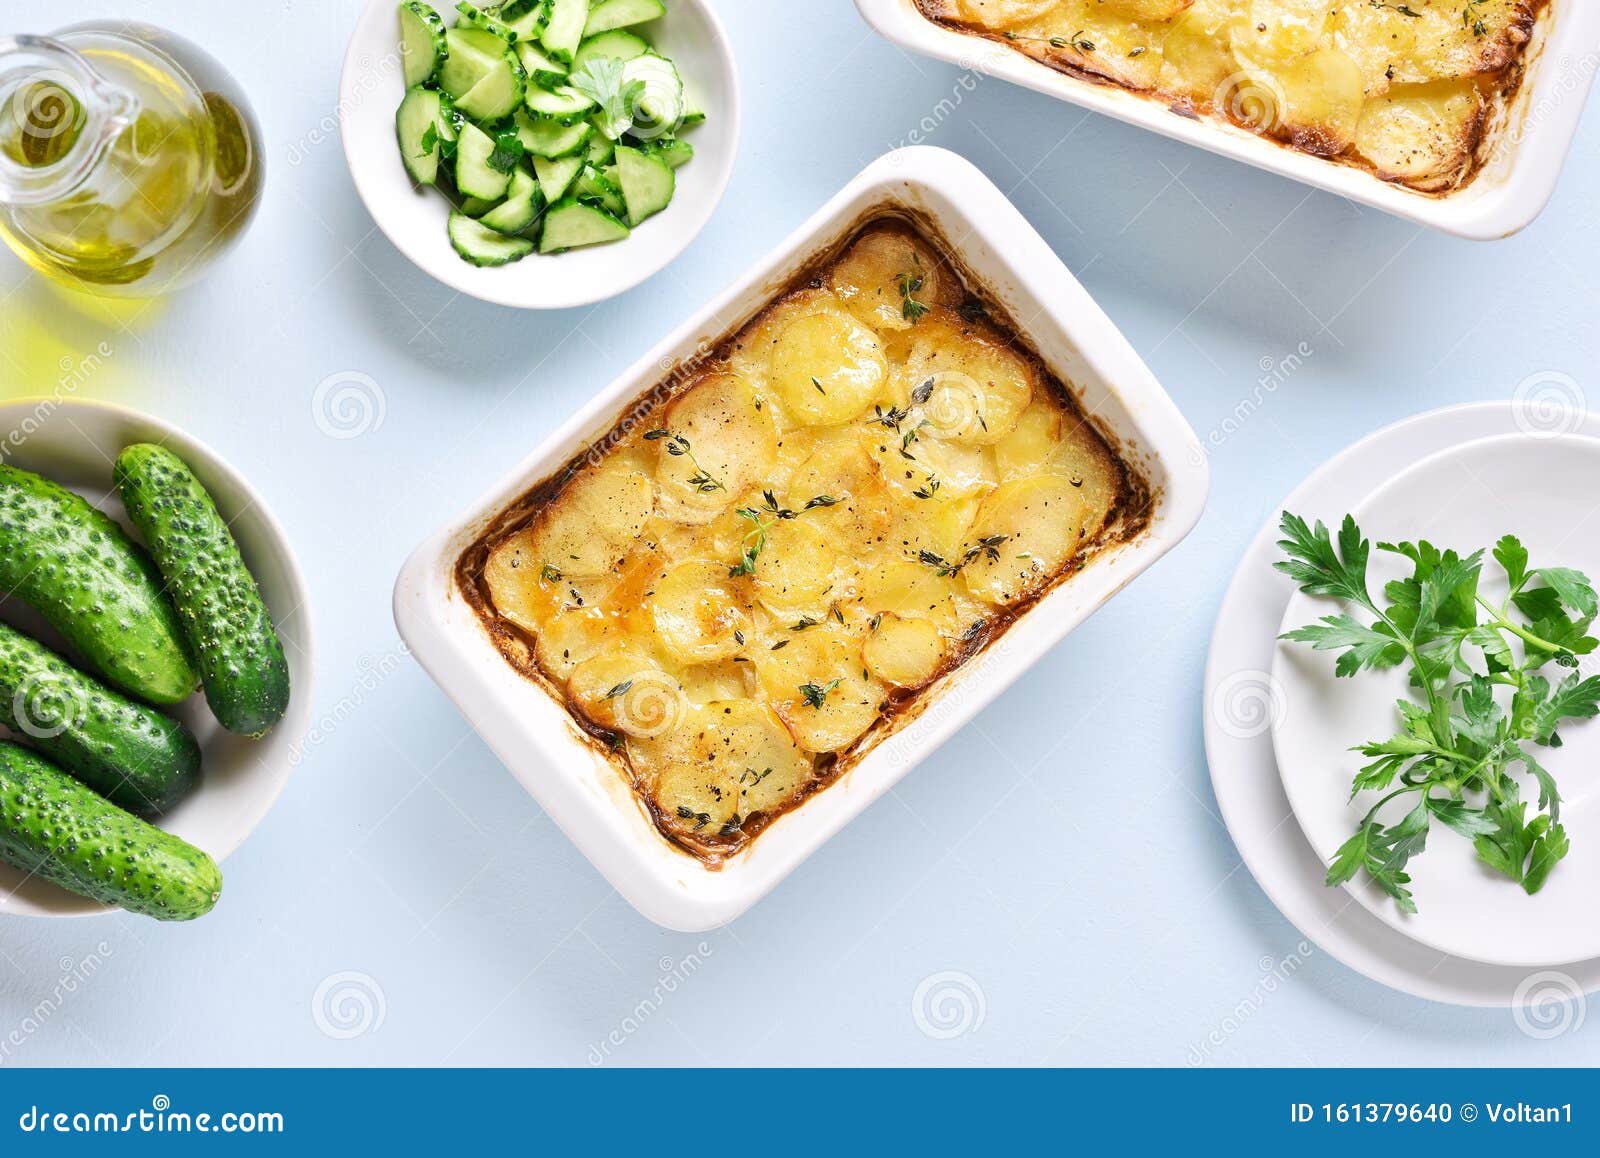 Potato Gratin in Baking Dish Stock Photo - Image of cheese, baked ...